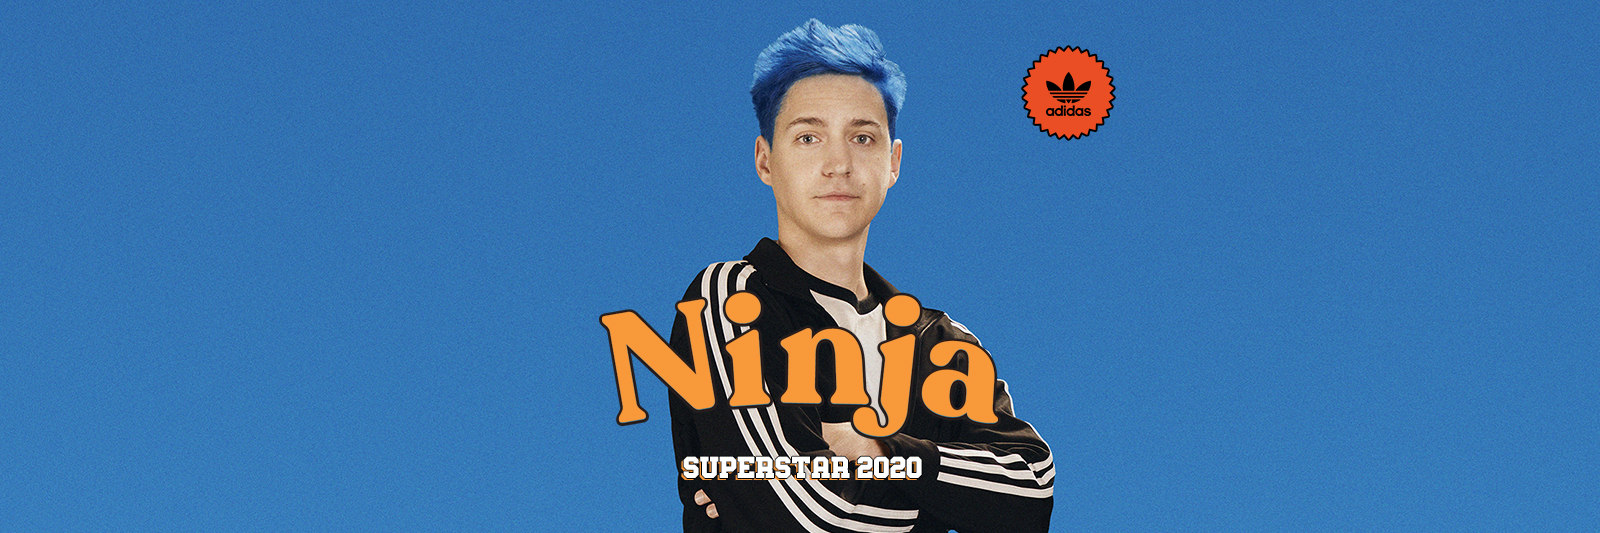 ninja superstar shoes